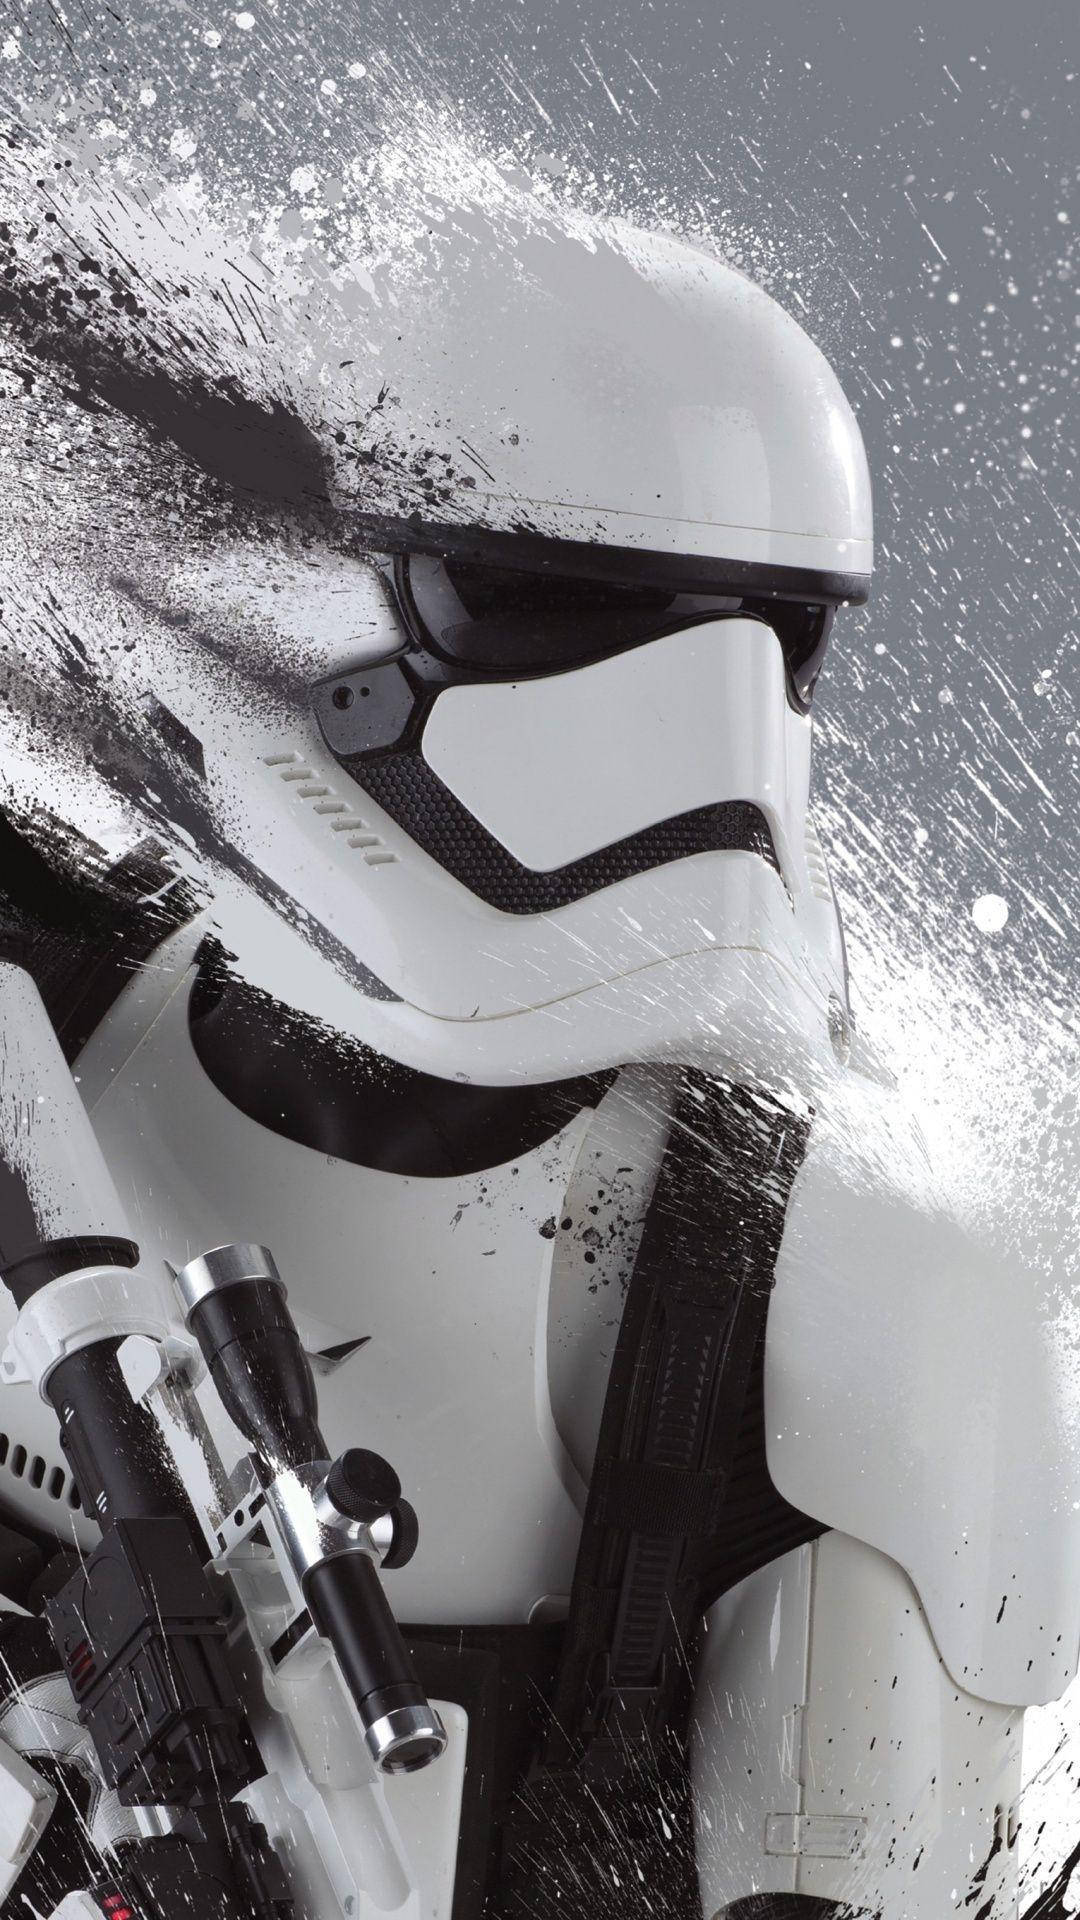 Star wars, clone trooper 4K wallpaper download